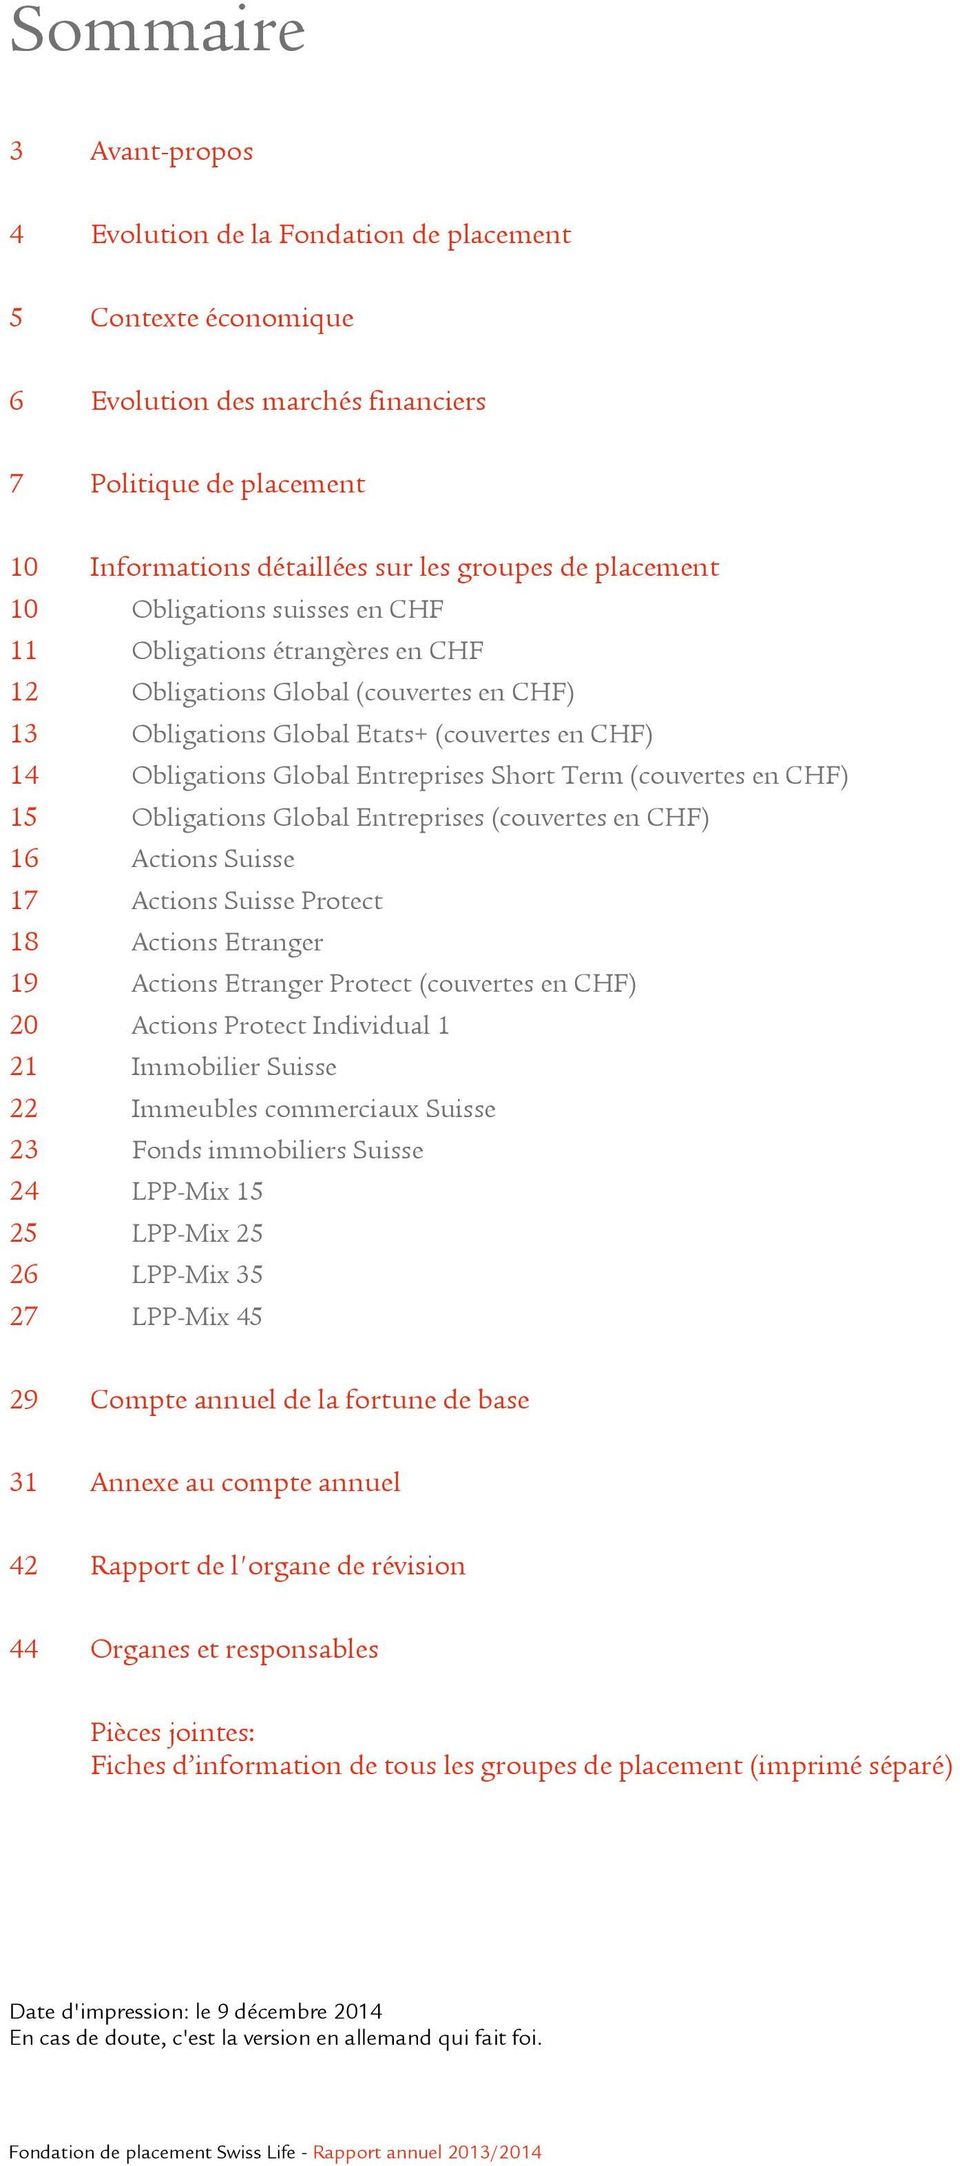 Short Term (couvertes en CHF) 15 Obligations Global Entreprises (couvertes en CHF) 16 Actions Suisse 17 Actions Suisse Protect 18 Actions Etranger 19 Actions Etranger Protect (couvertes en CHF) 20